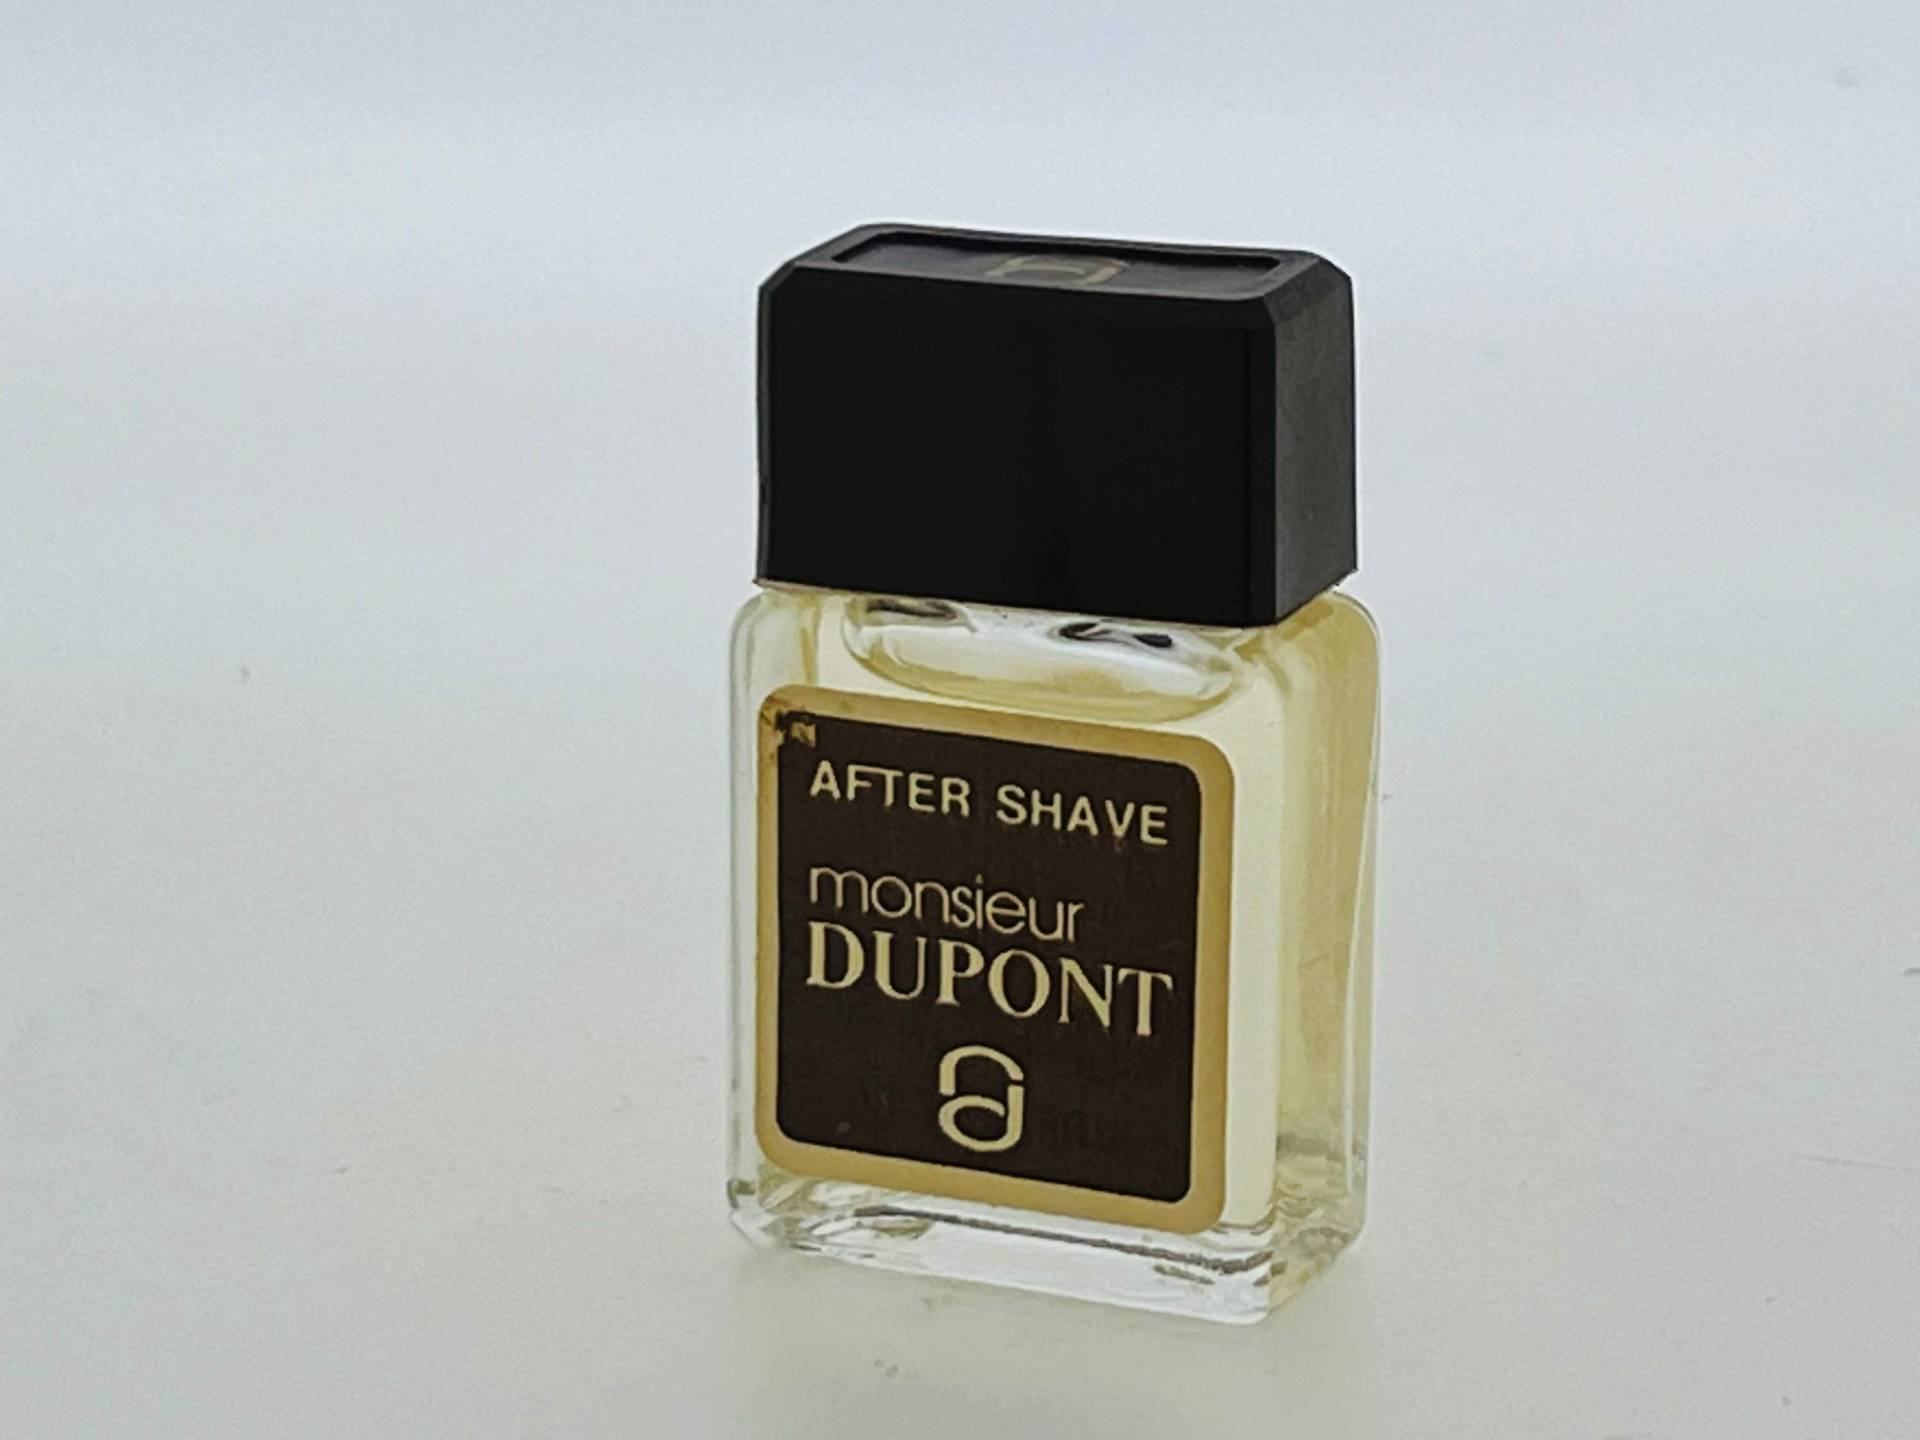 Monsieur Dupont, Richard Dupont 1972 After Shave Miniatur 5 Ml von VintagGlamour